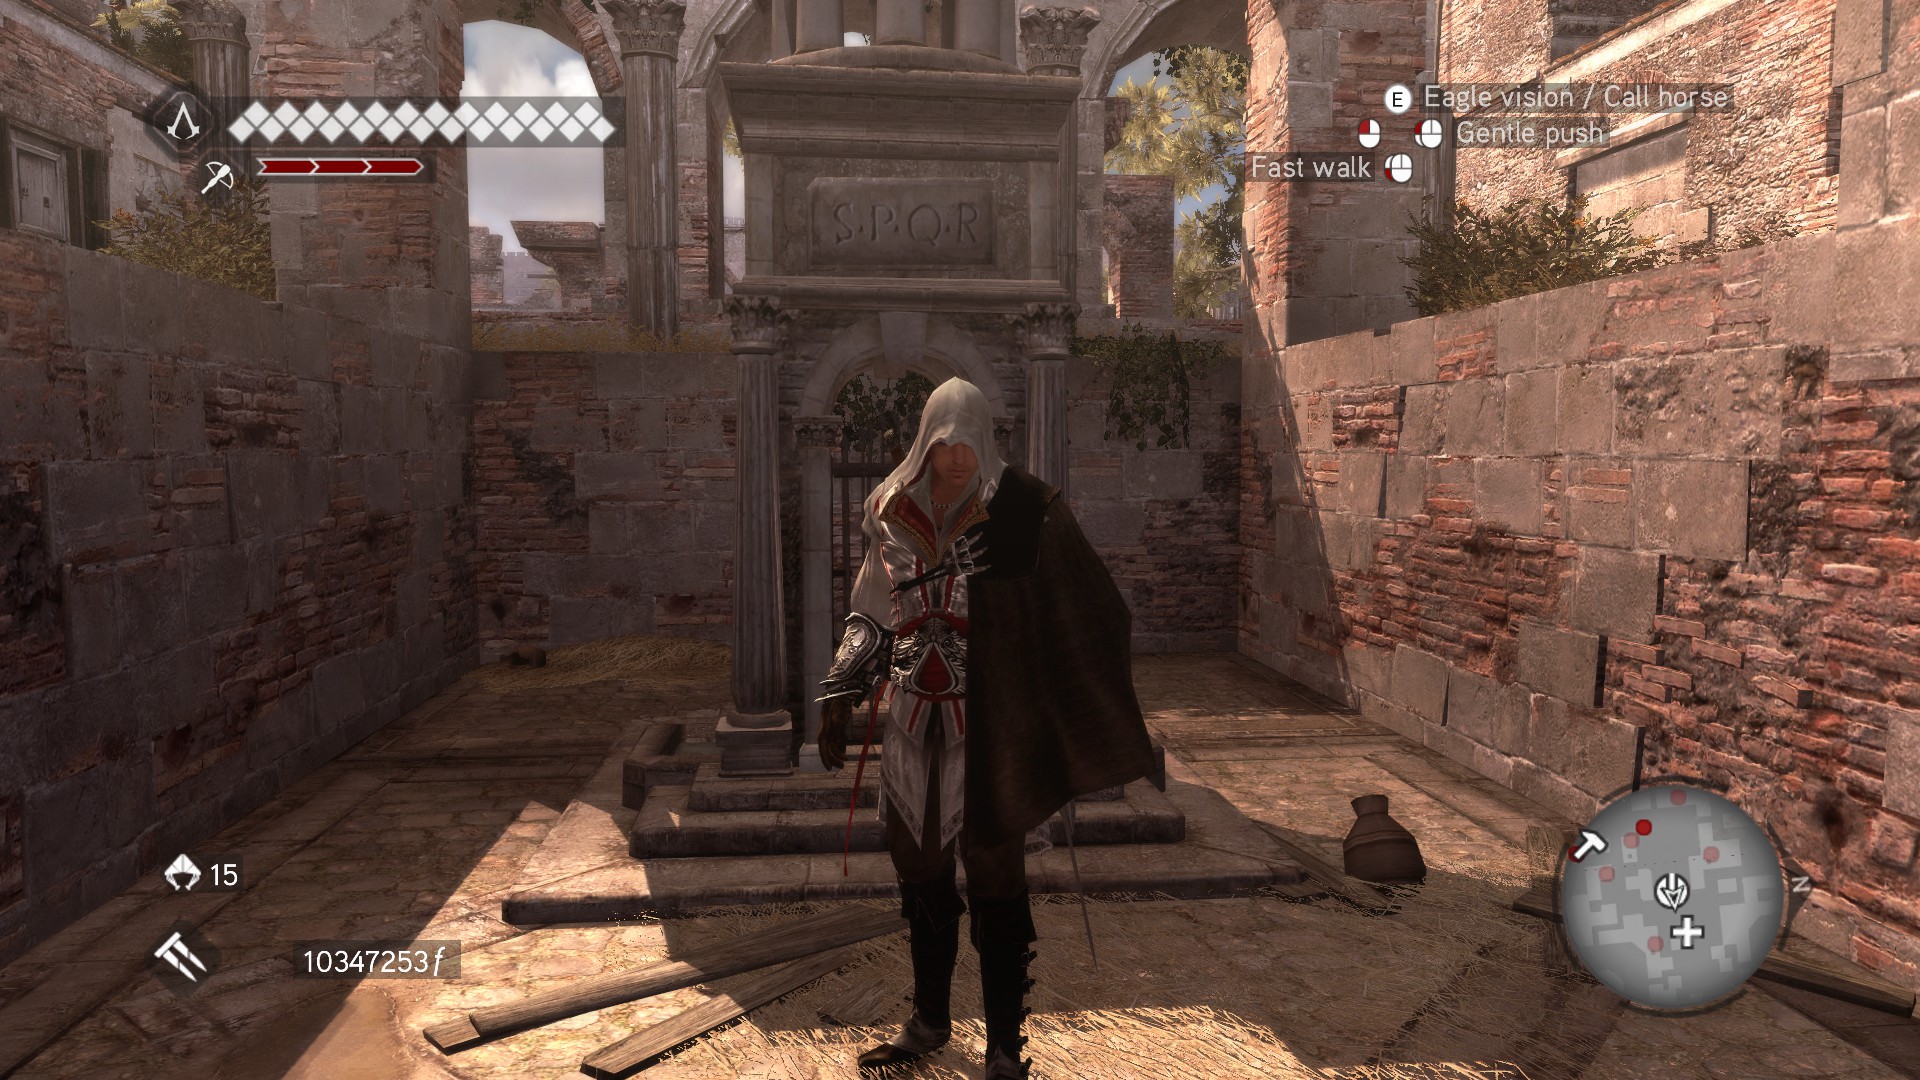 Brotherhood mod. Assassin's Creed Brotherhood одежда Джованни. Assassin's Creed Brotherhood Giovanni outfit. Assassins Creed Brotherhood Mod 2 скрытых клинка. Assassin's Creed Brotherhood e3 outfit.